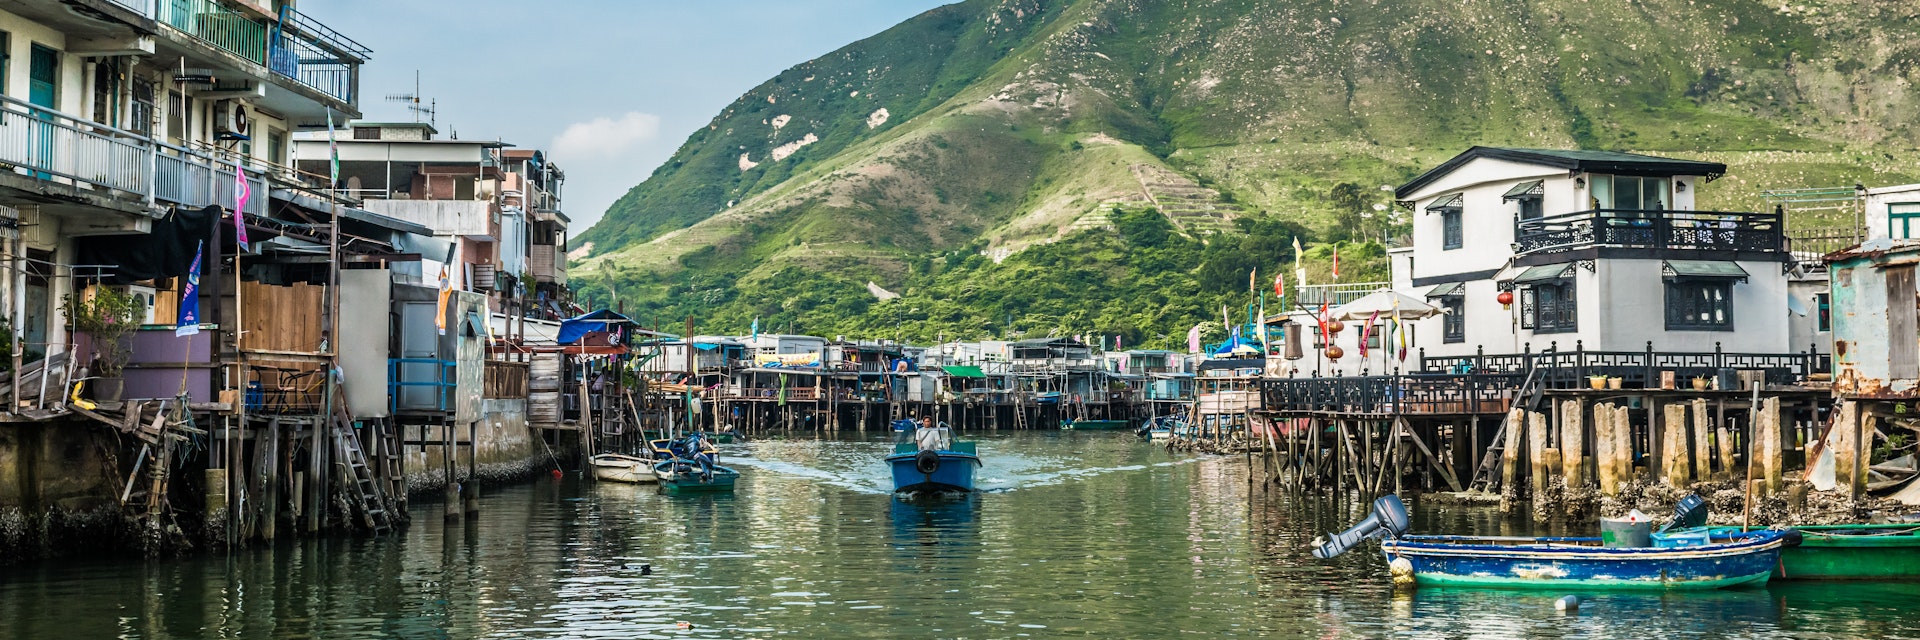 Tai O, Hong Kong, China- June 10, 2014: stilt houses and fishermen motorboats in Lantau island